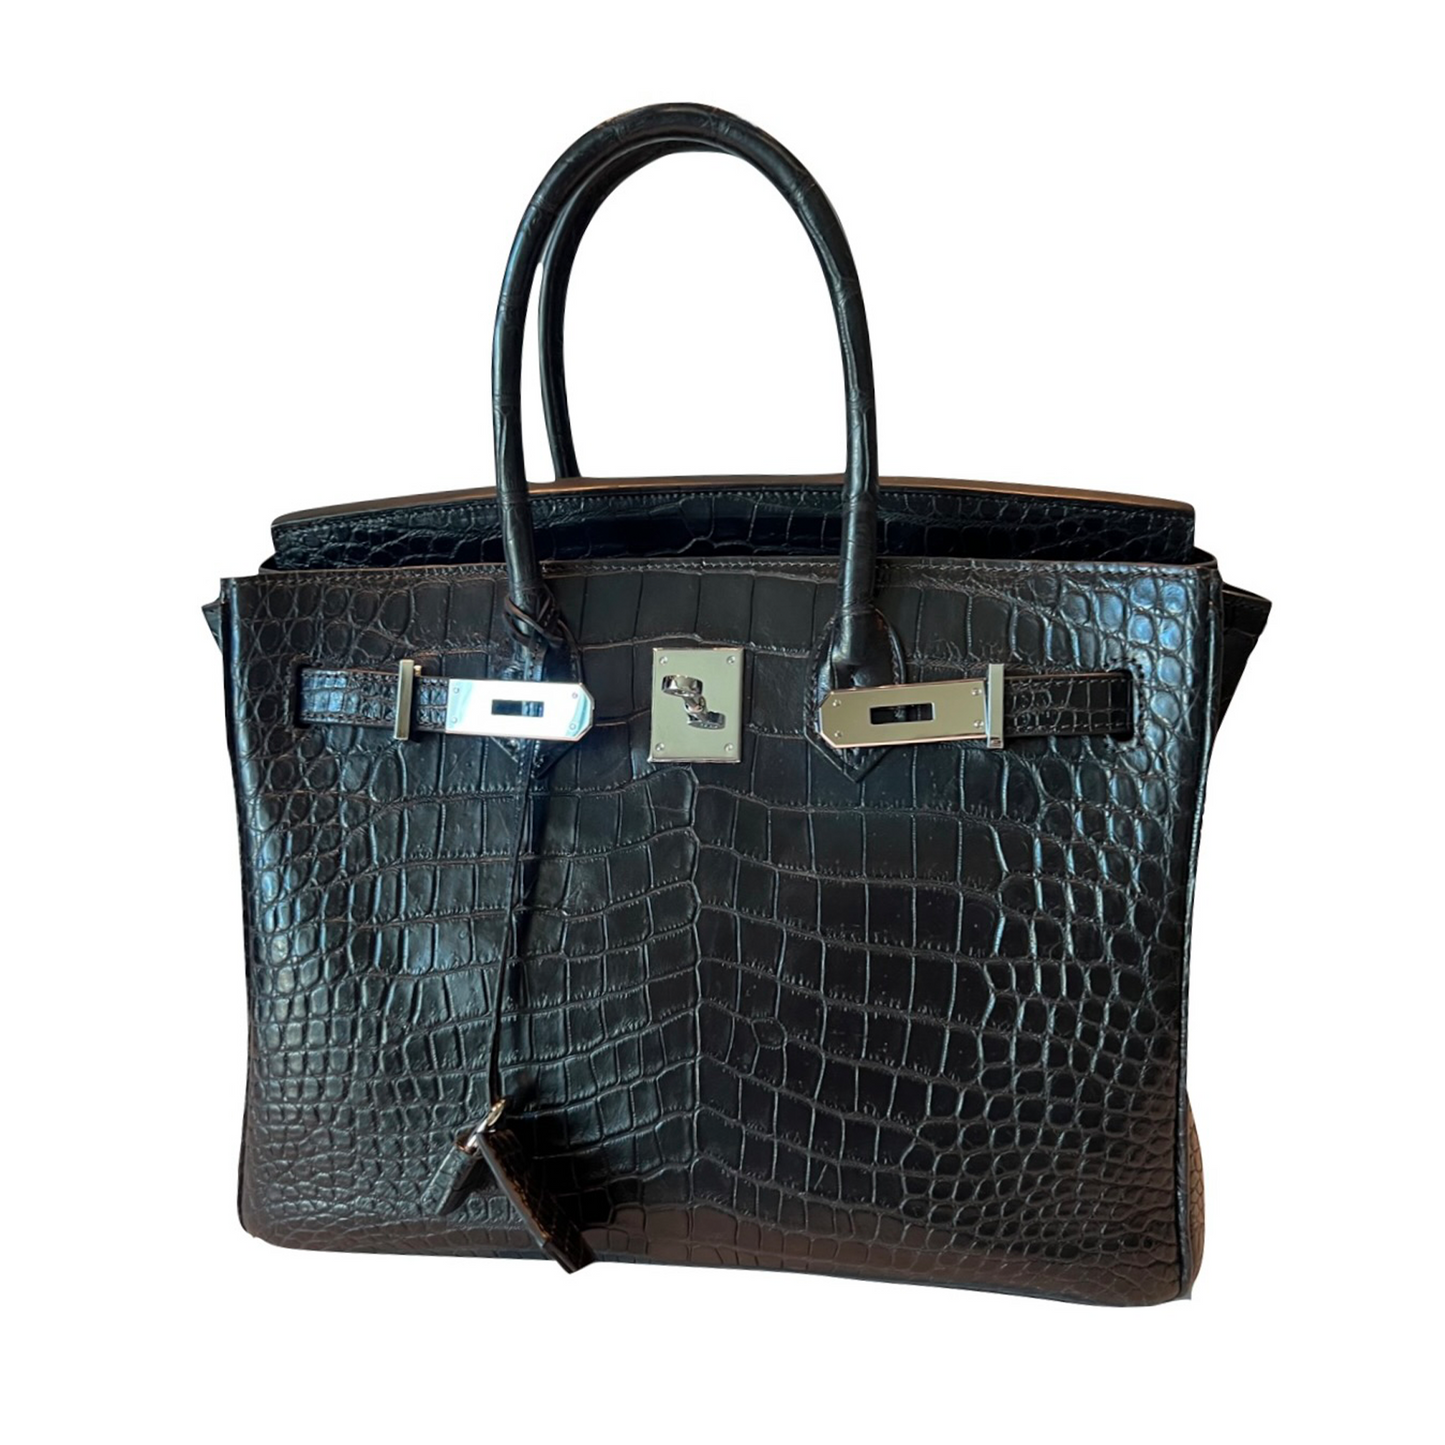 Duchess Handbag in Black Matte Crocodile Belly Skin